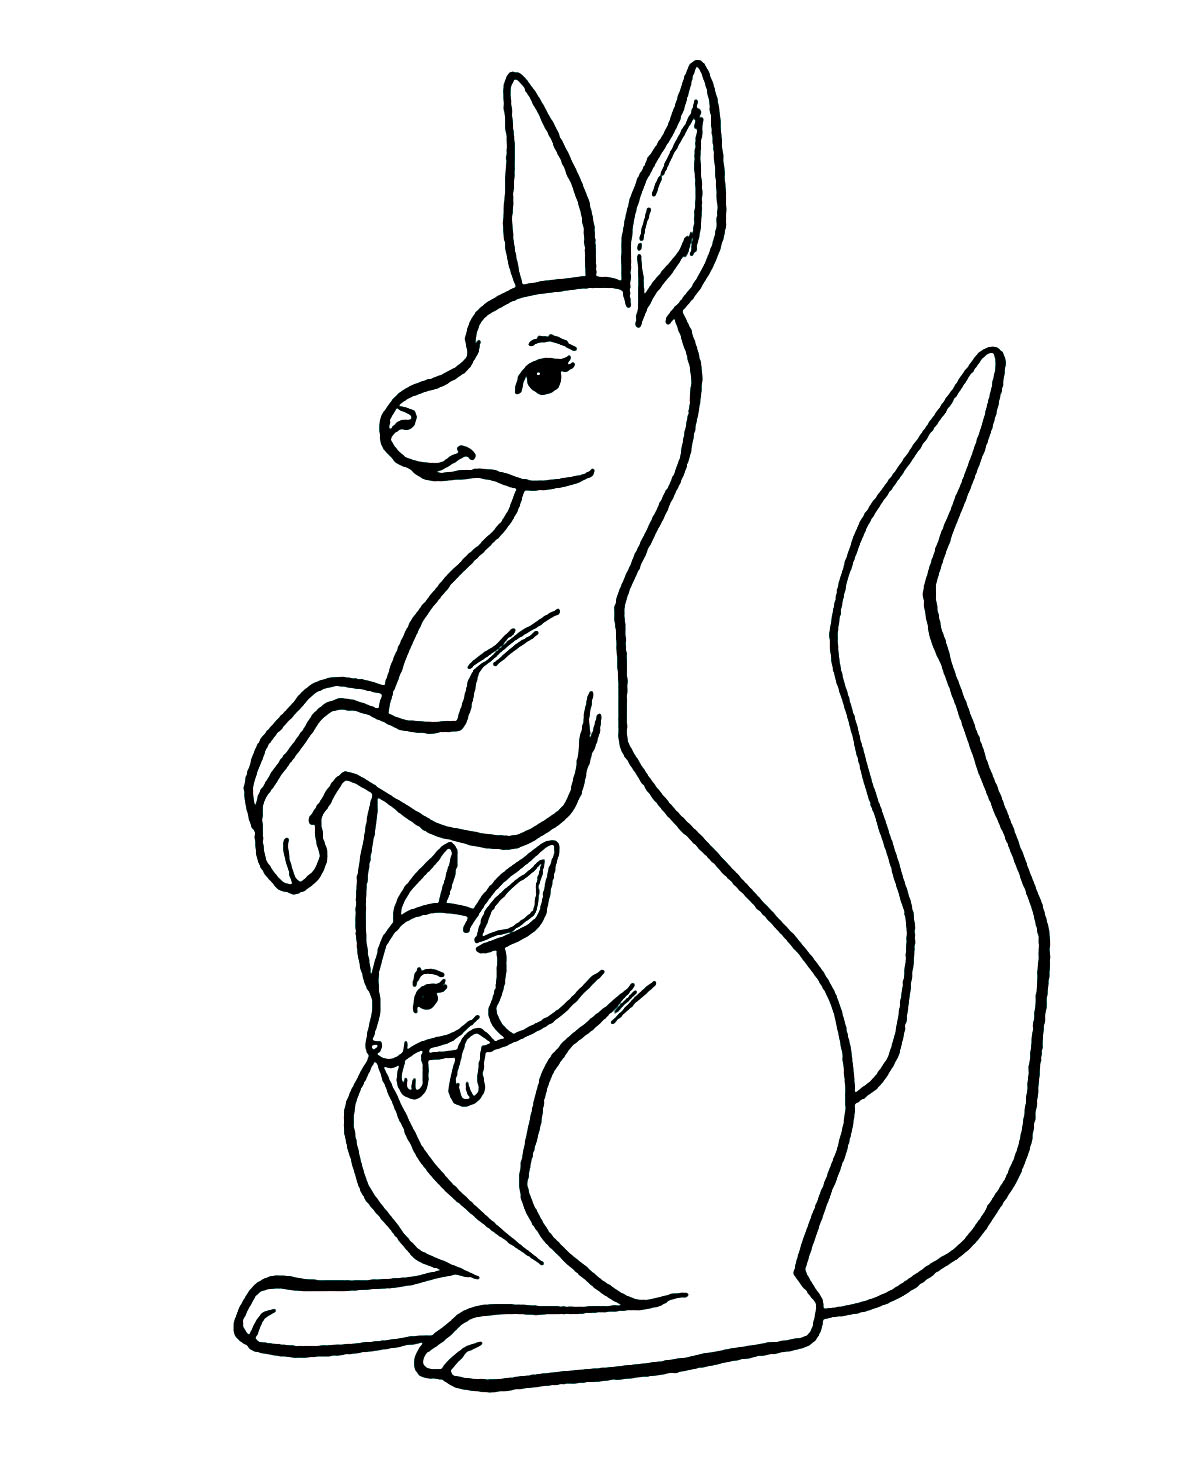 Download Kangaroos to color for kids - Kangaroos Kids Coloring Pages